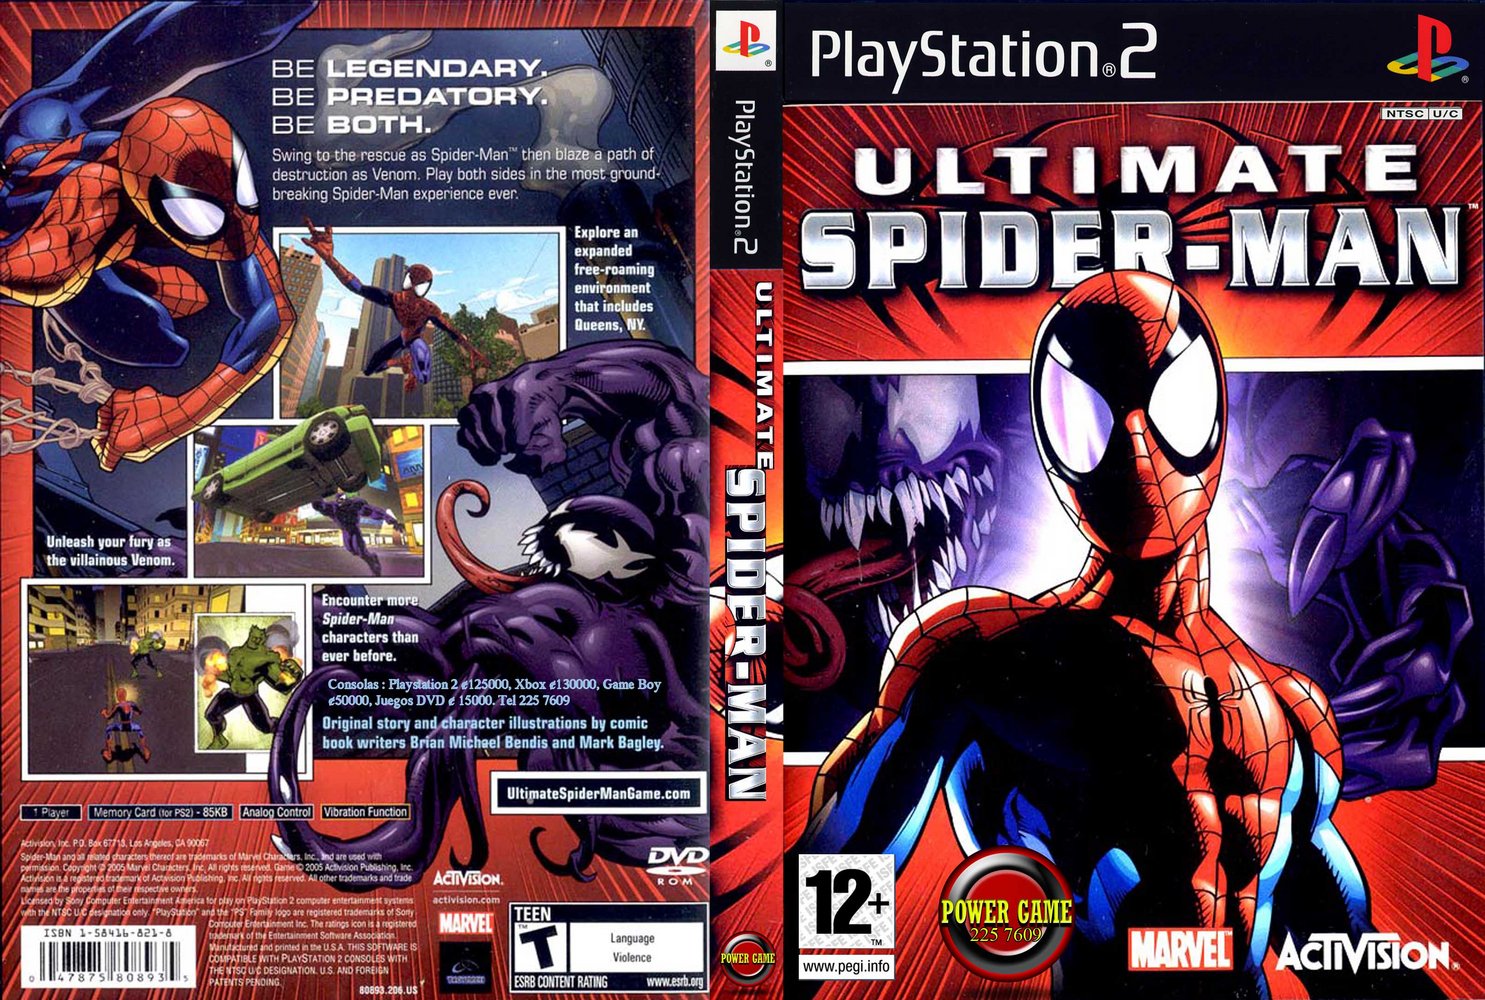 Vista ultimate spiderman edition ps2